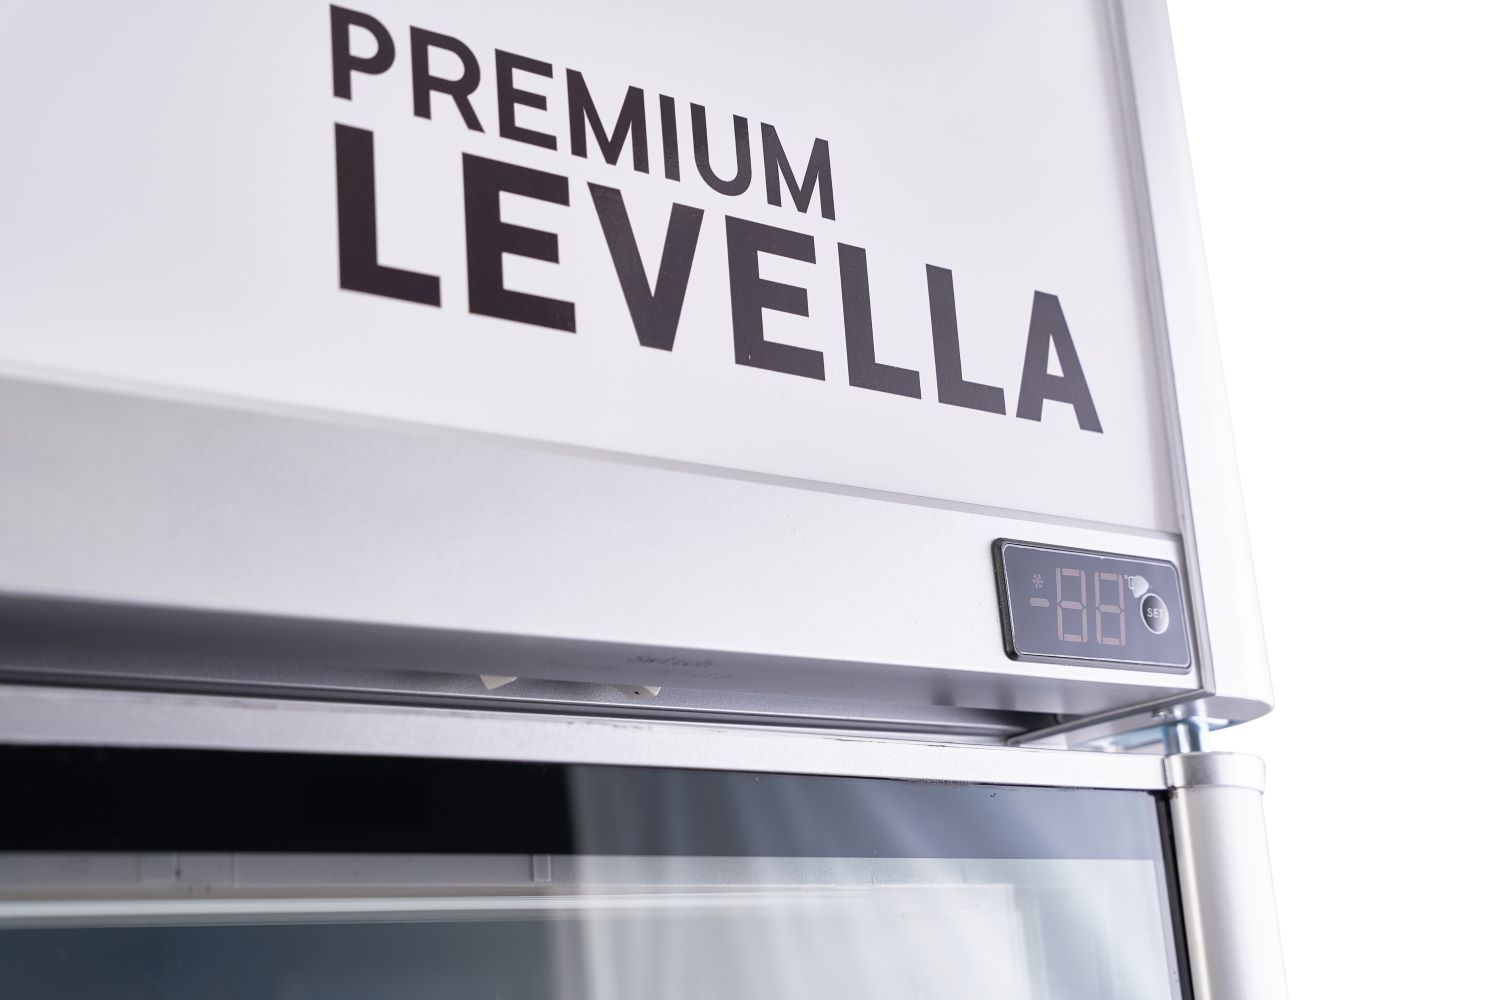 2-in-1 Stand & Hand Mixer - Premium Levella